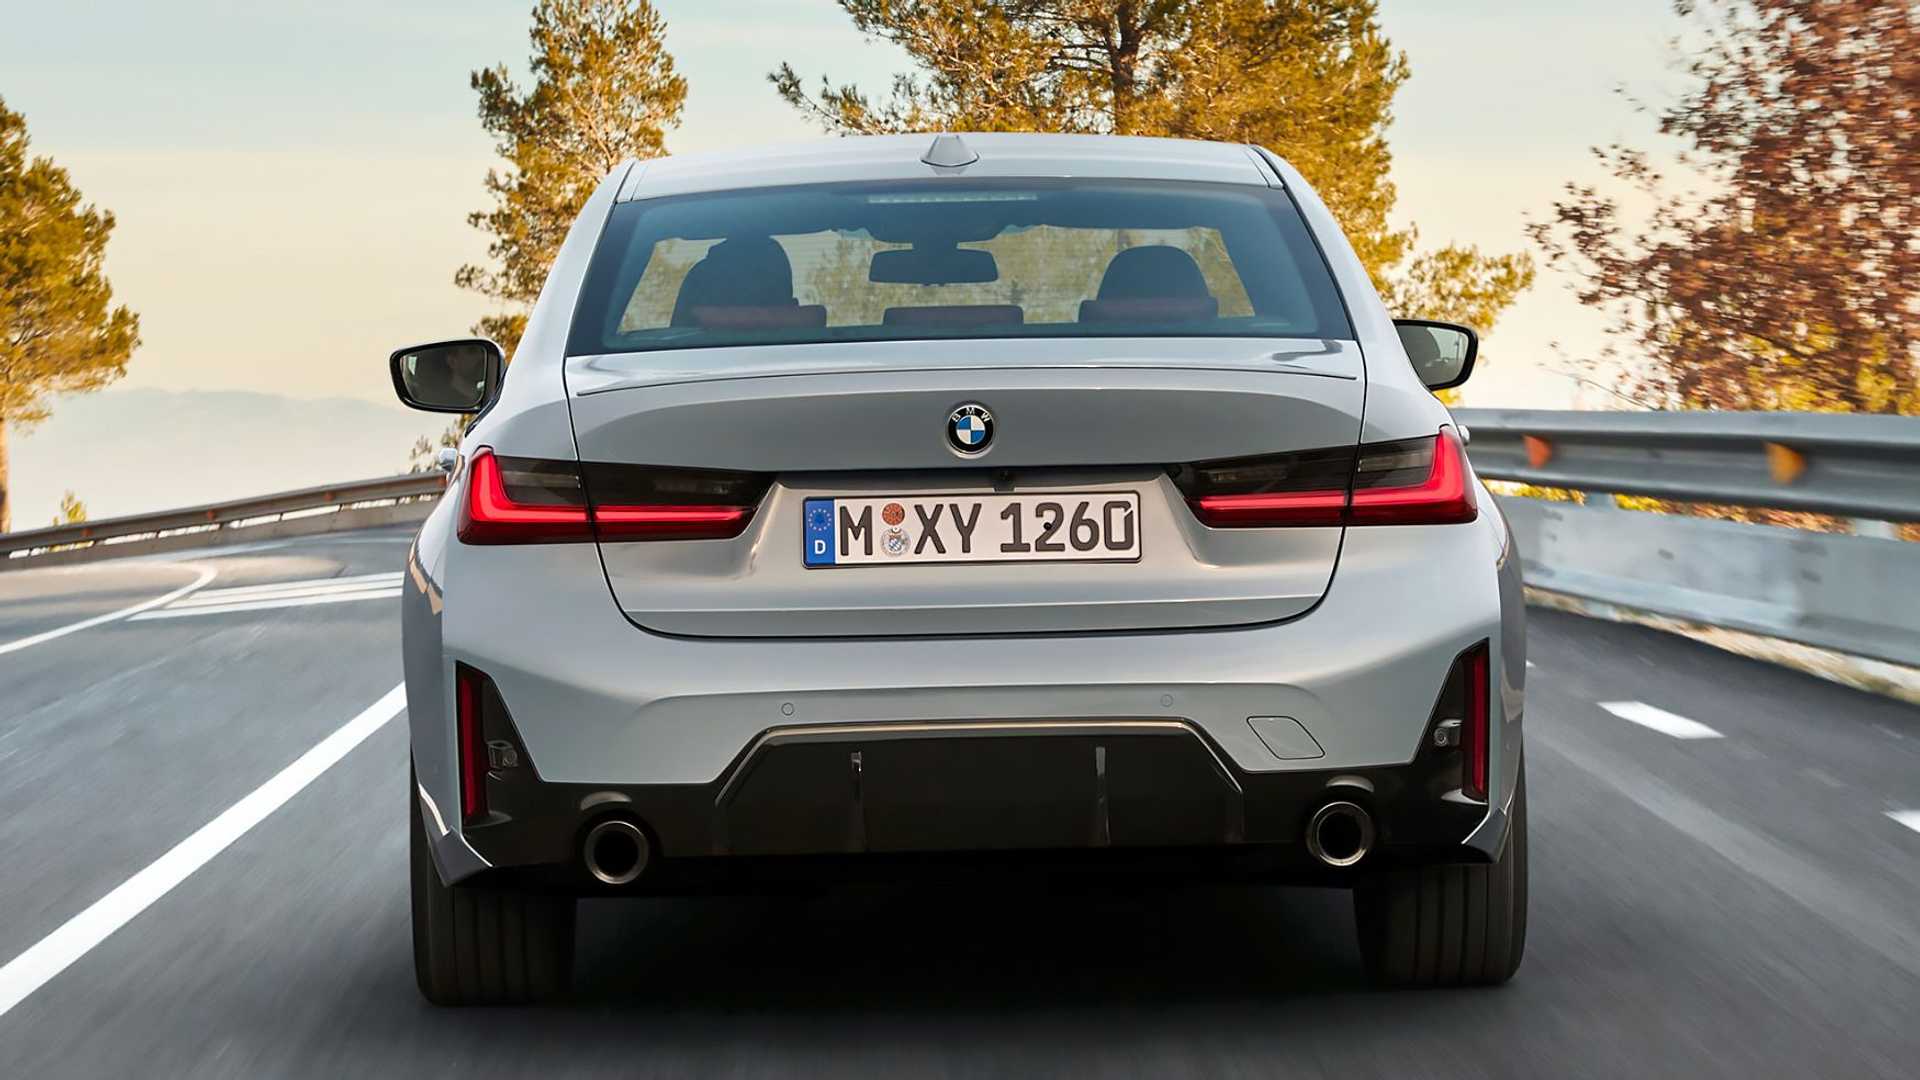 BMW 320i tabela fipe